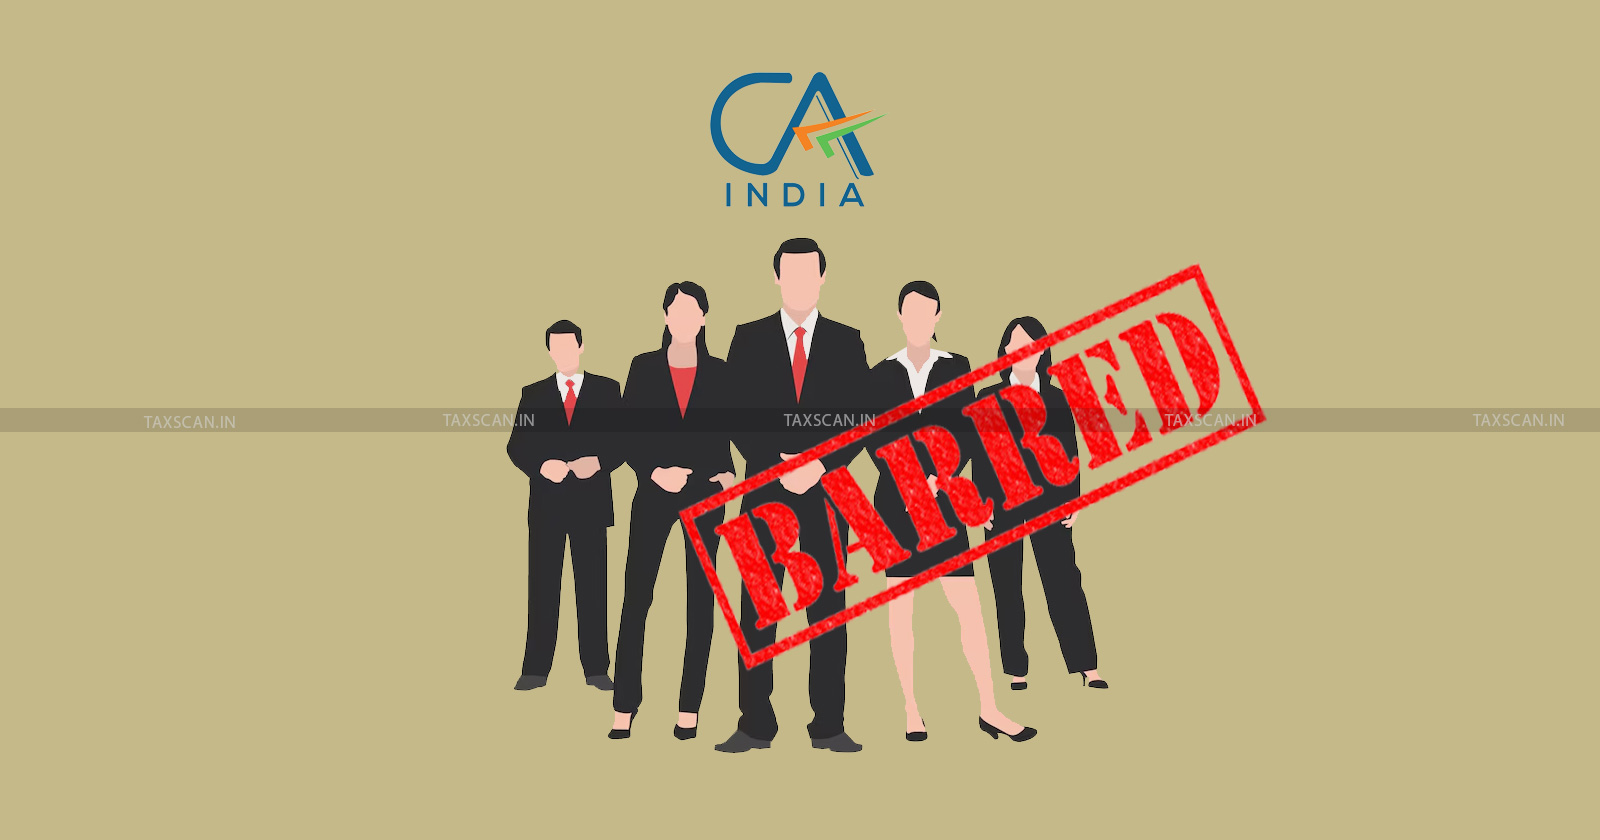 ICAI Disciplinary Committee - ICAI - INC 22 - Chartered Accountant - ICAI disciplinary action - TAXSCAN